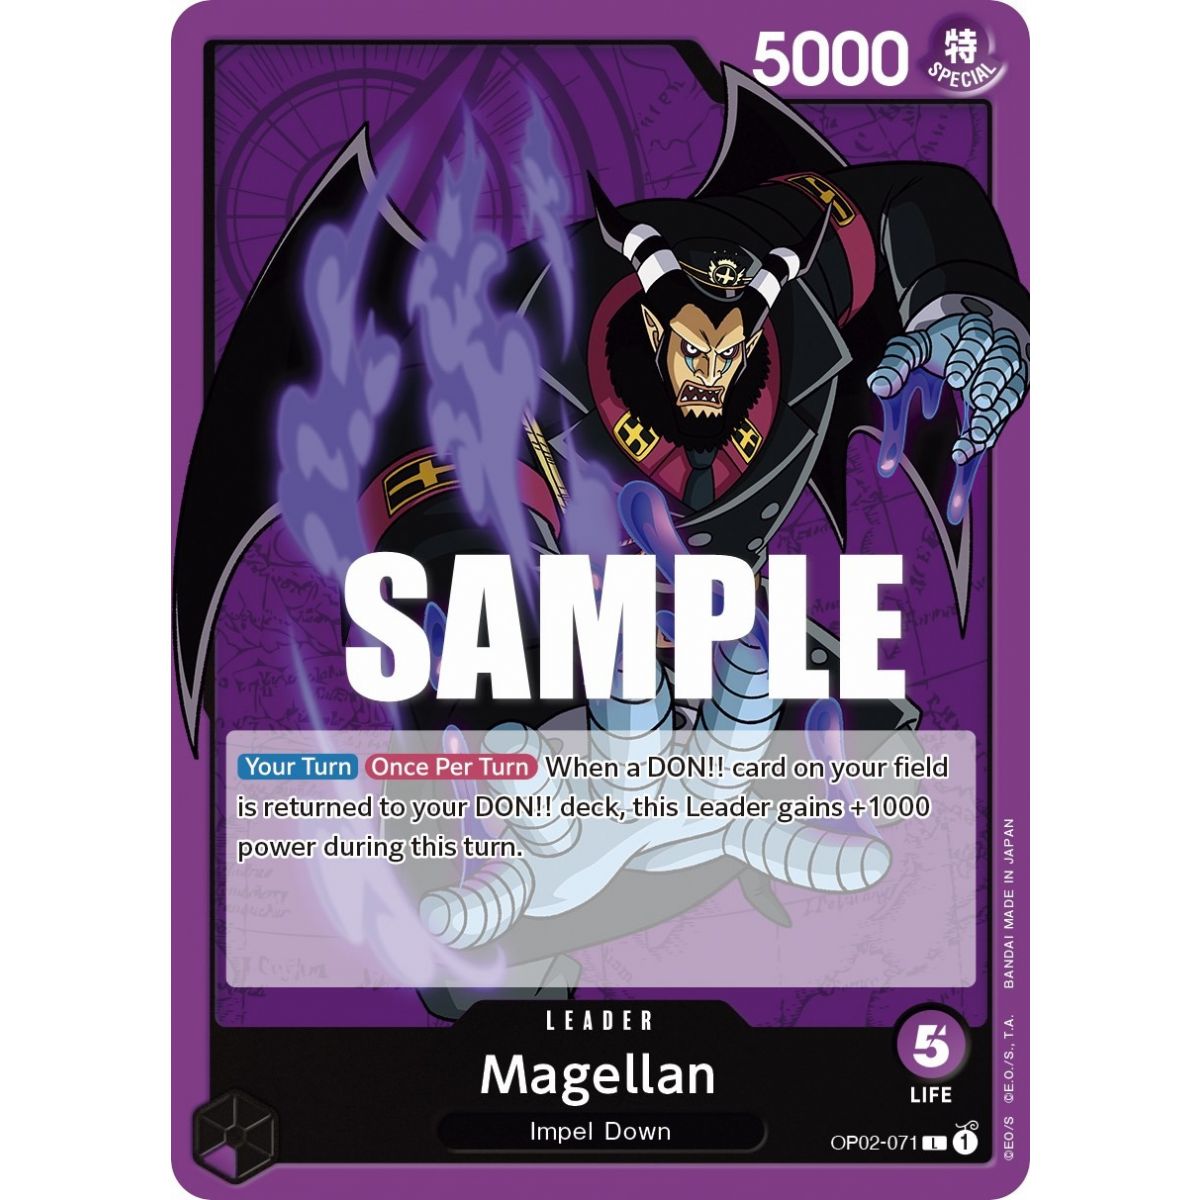 Magellan (071) – L OP02-071 – OP02 Paramount War